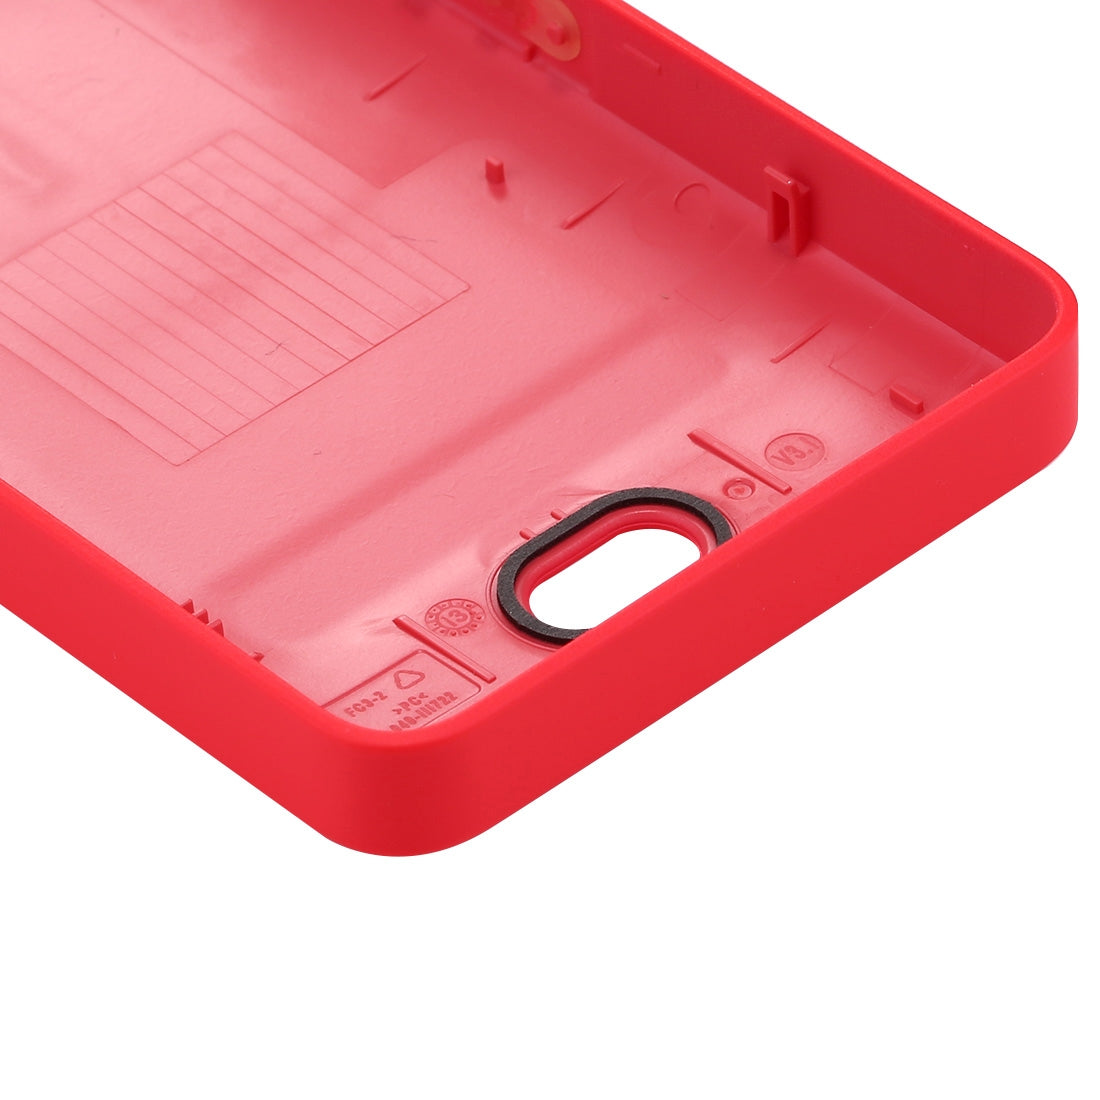 Tapa Bateria Back Cover Nokia Asha 501 Rojo